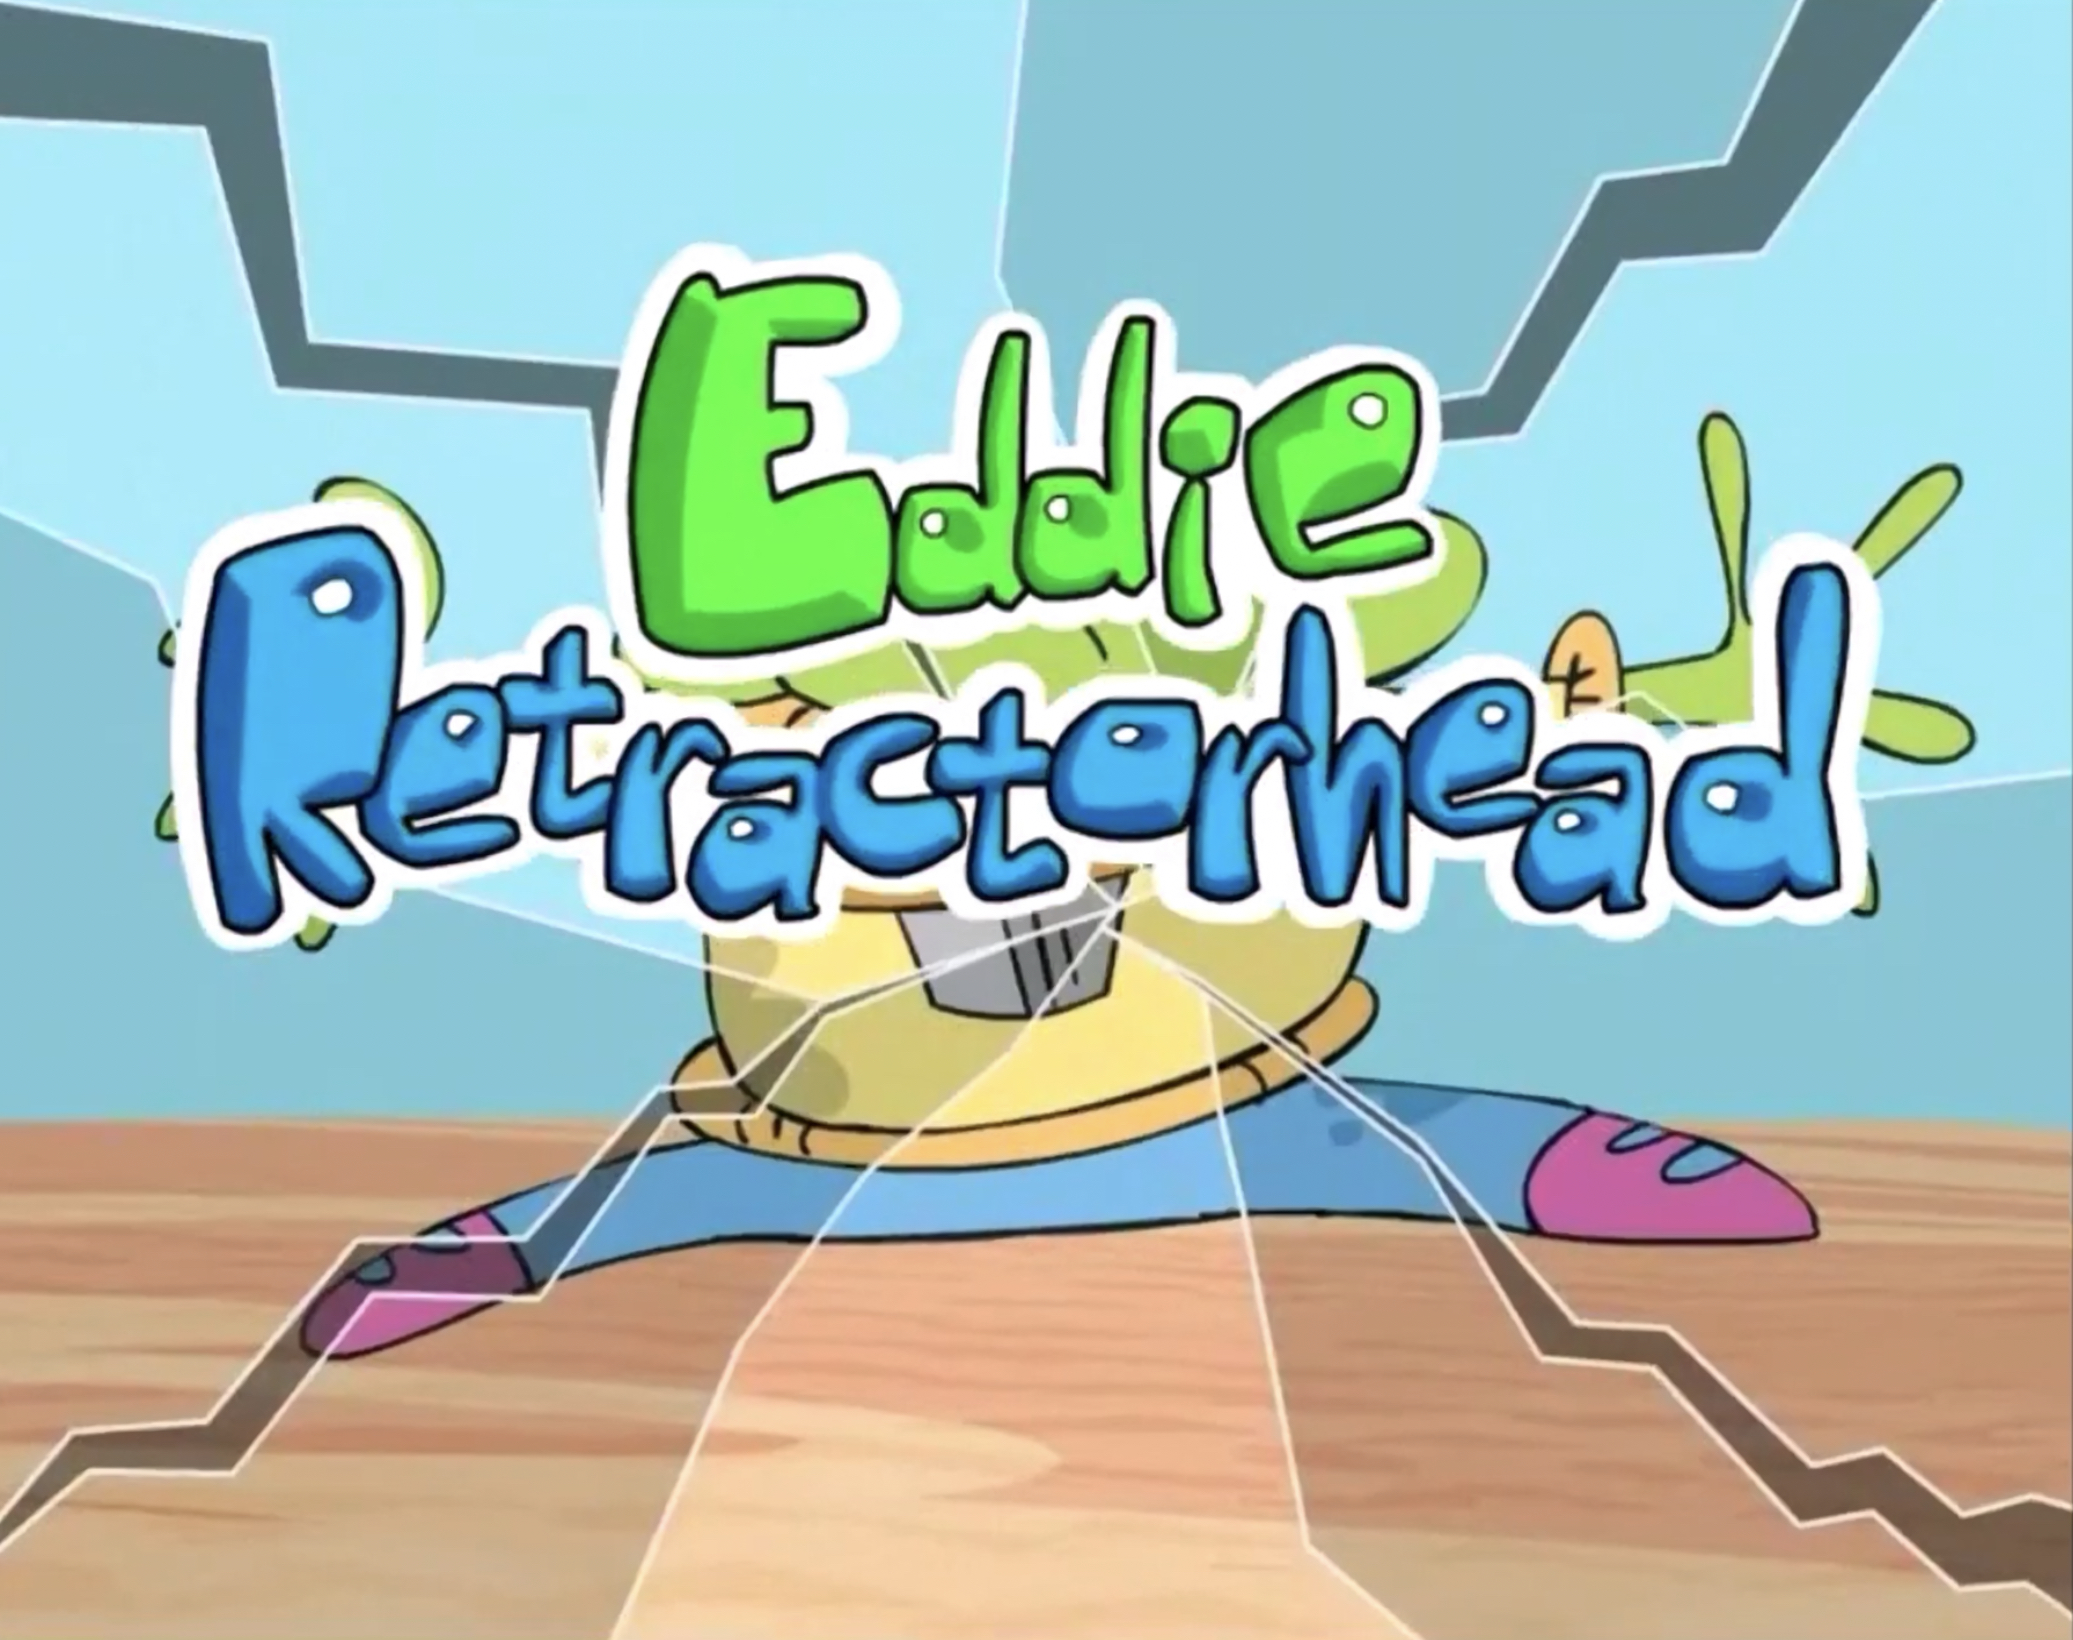 Eddie retractorhead logo.jpeg